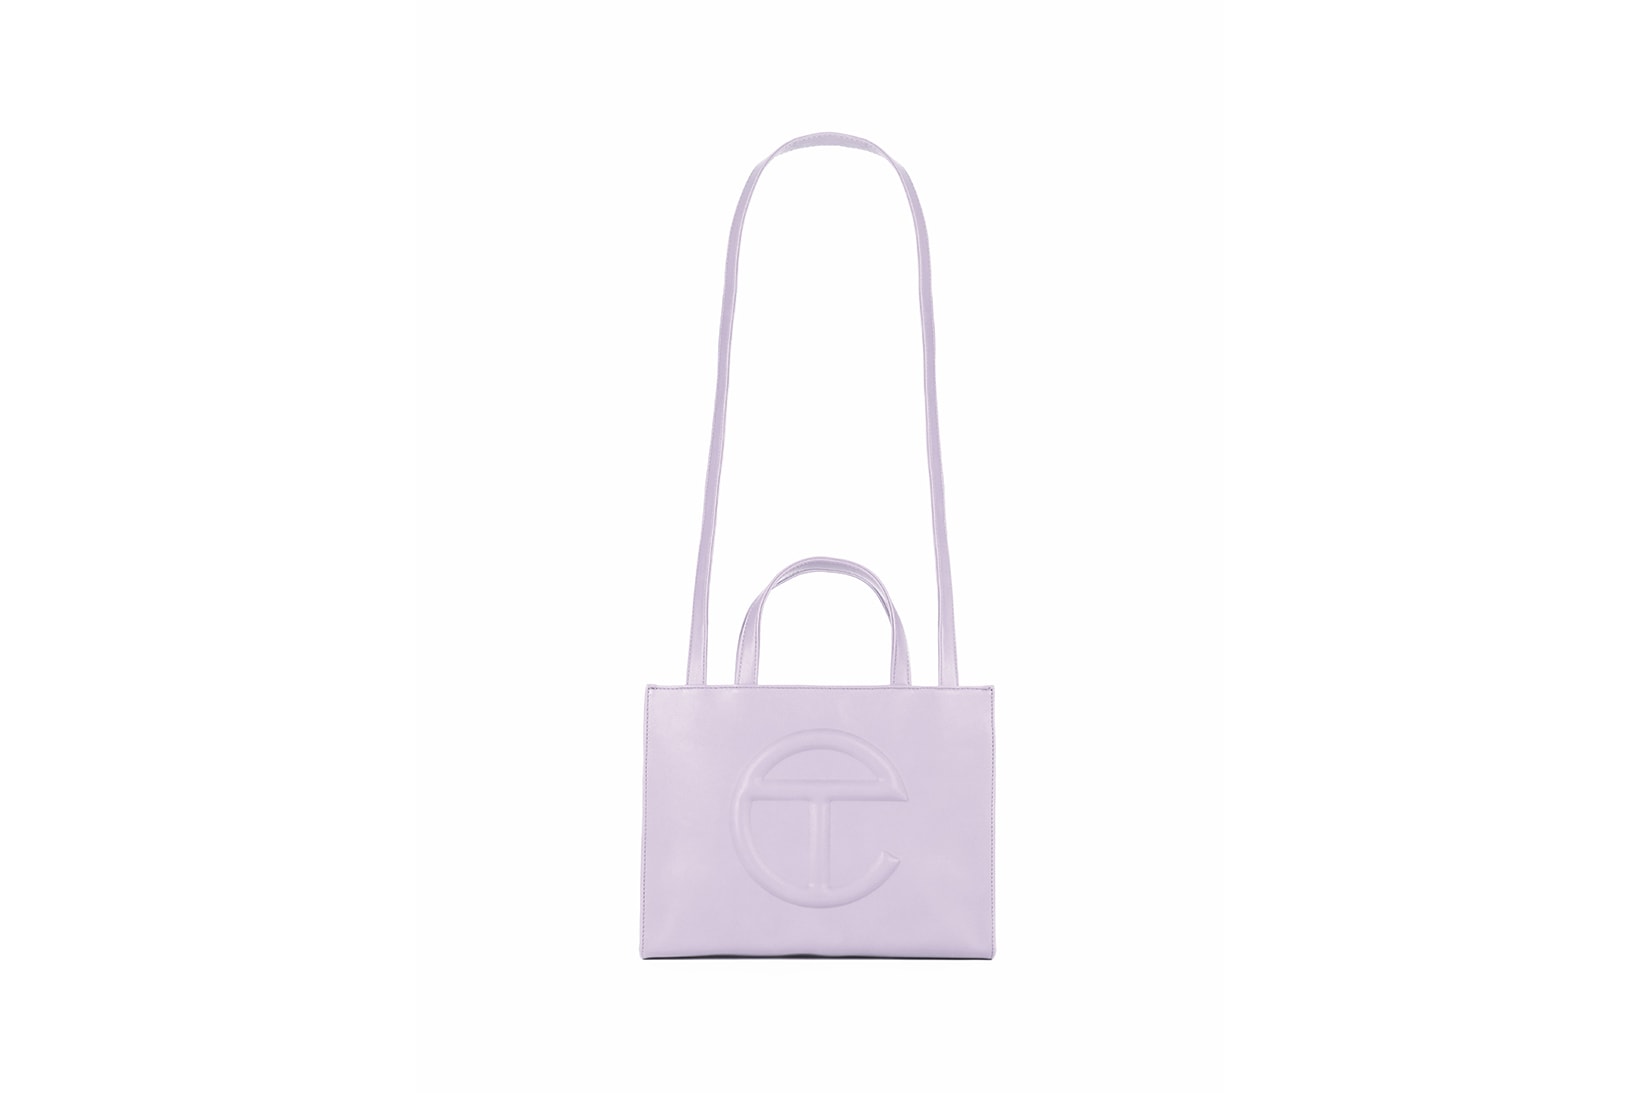 Telfar Shopping Bag New Lavendar Purple Color Medium